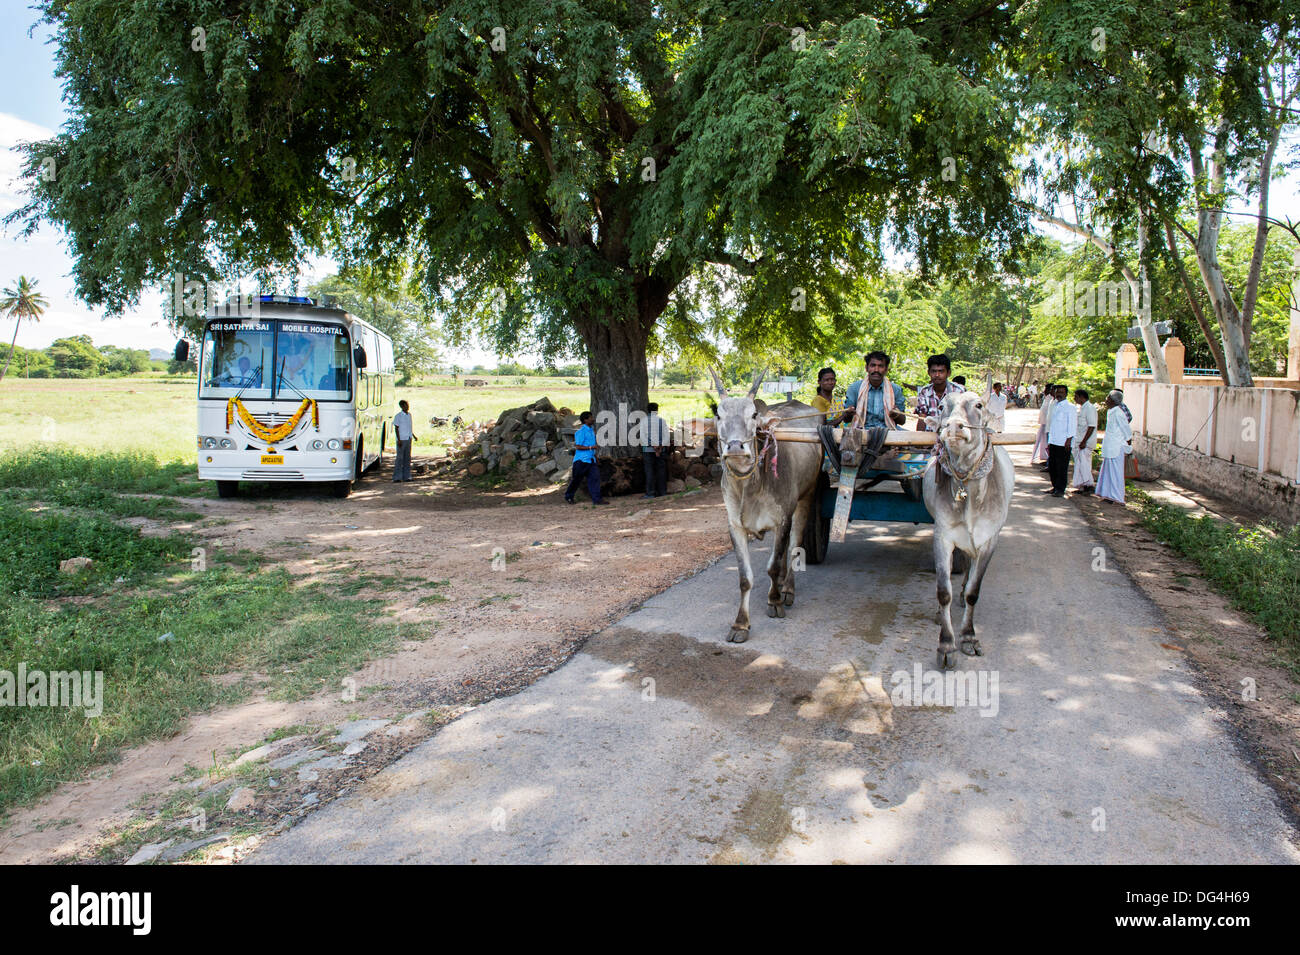 Sri Sathya Sai Baba mobile outreach hospital service clinic bus at a rural Indian village. Andhra Pradesh, India Stock Photo